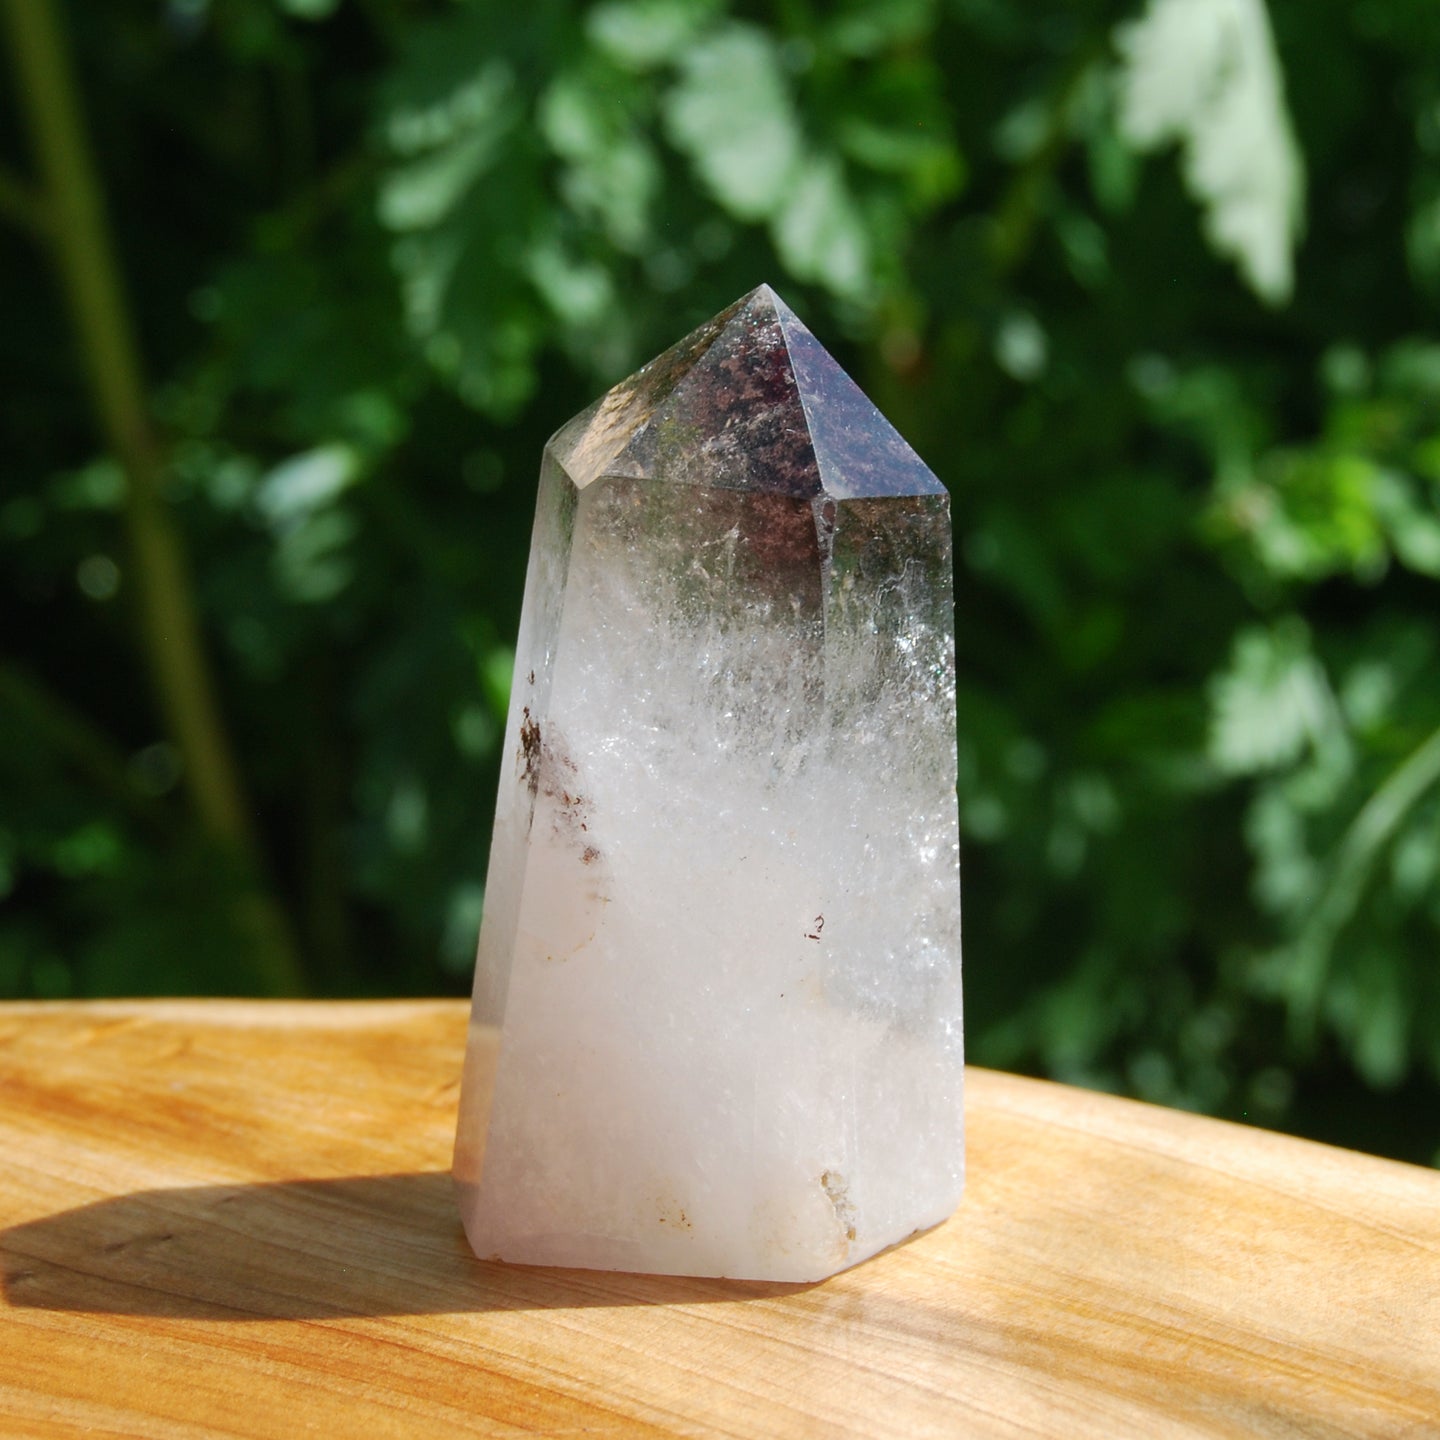 Scenic Lodolite Crystal Tower Landscape Quartz Garden Quartz Shamanic Dream Stone